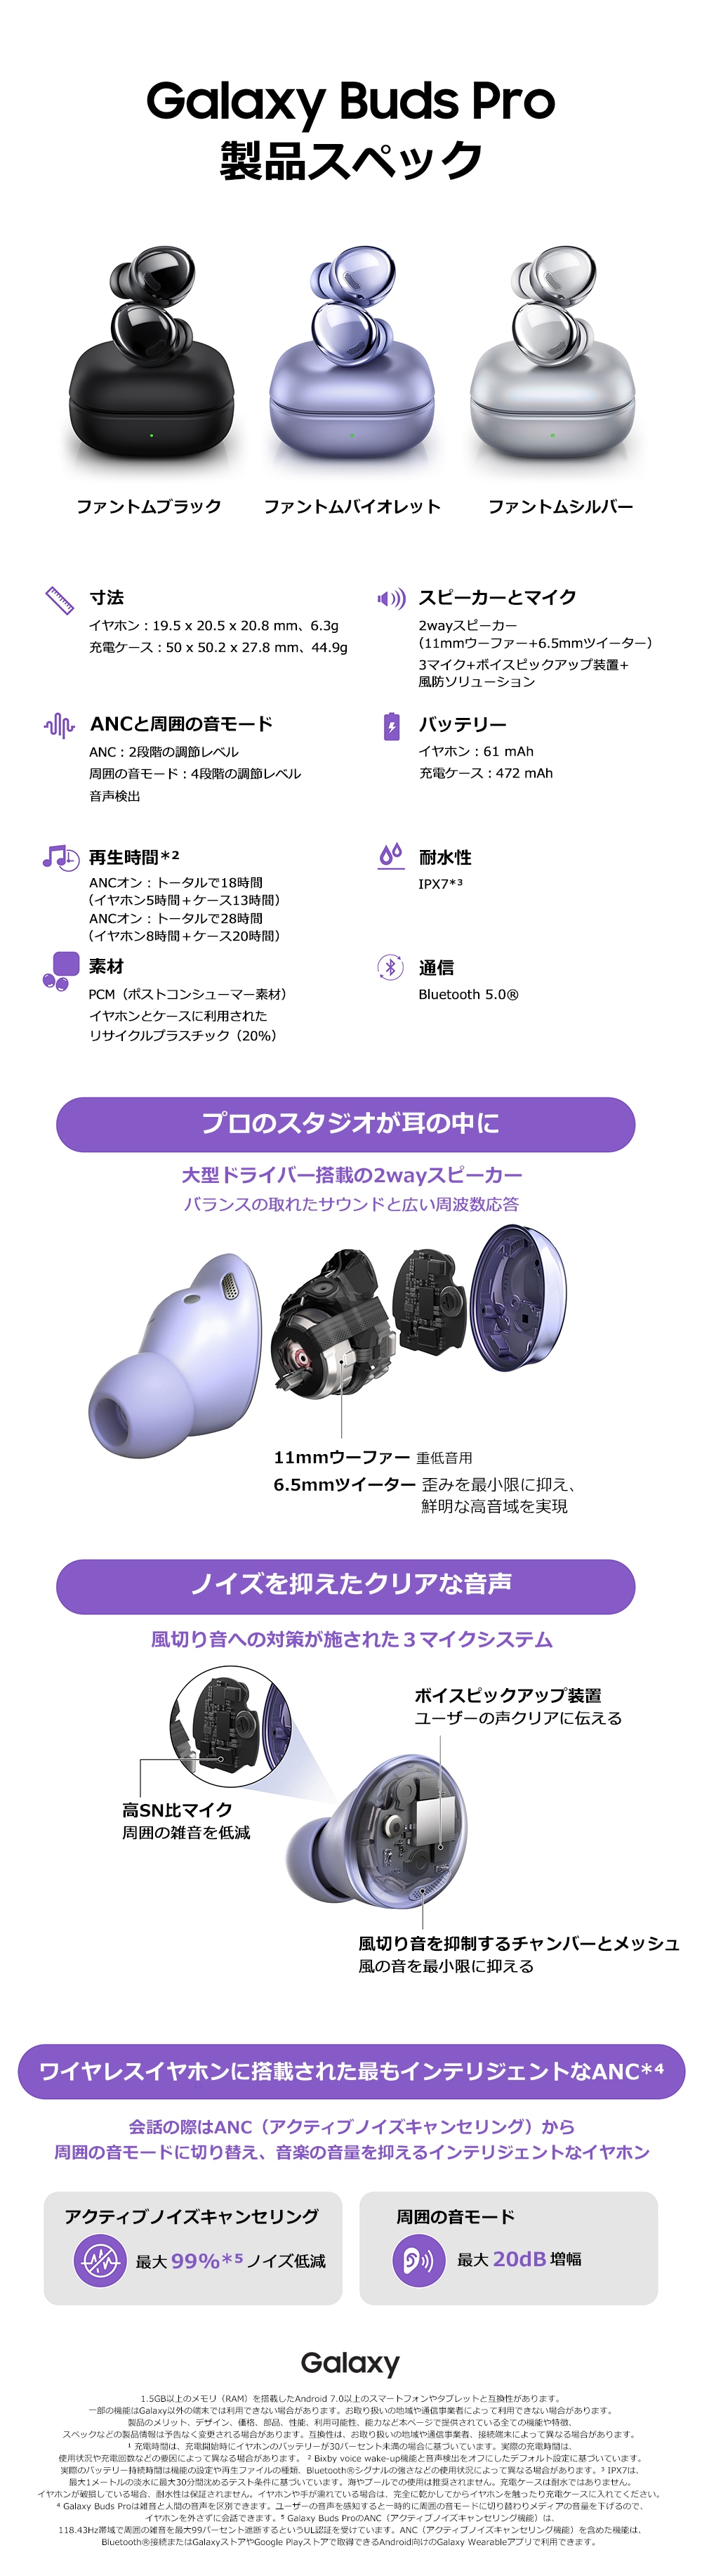 Galaxy Buds Pro インフォグラフィック | Samsung Japan 公式